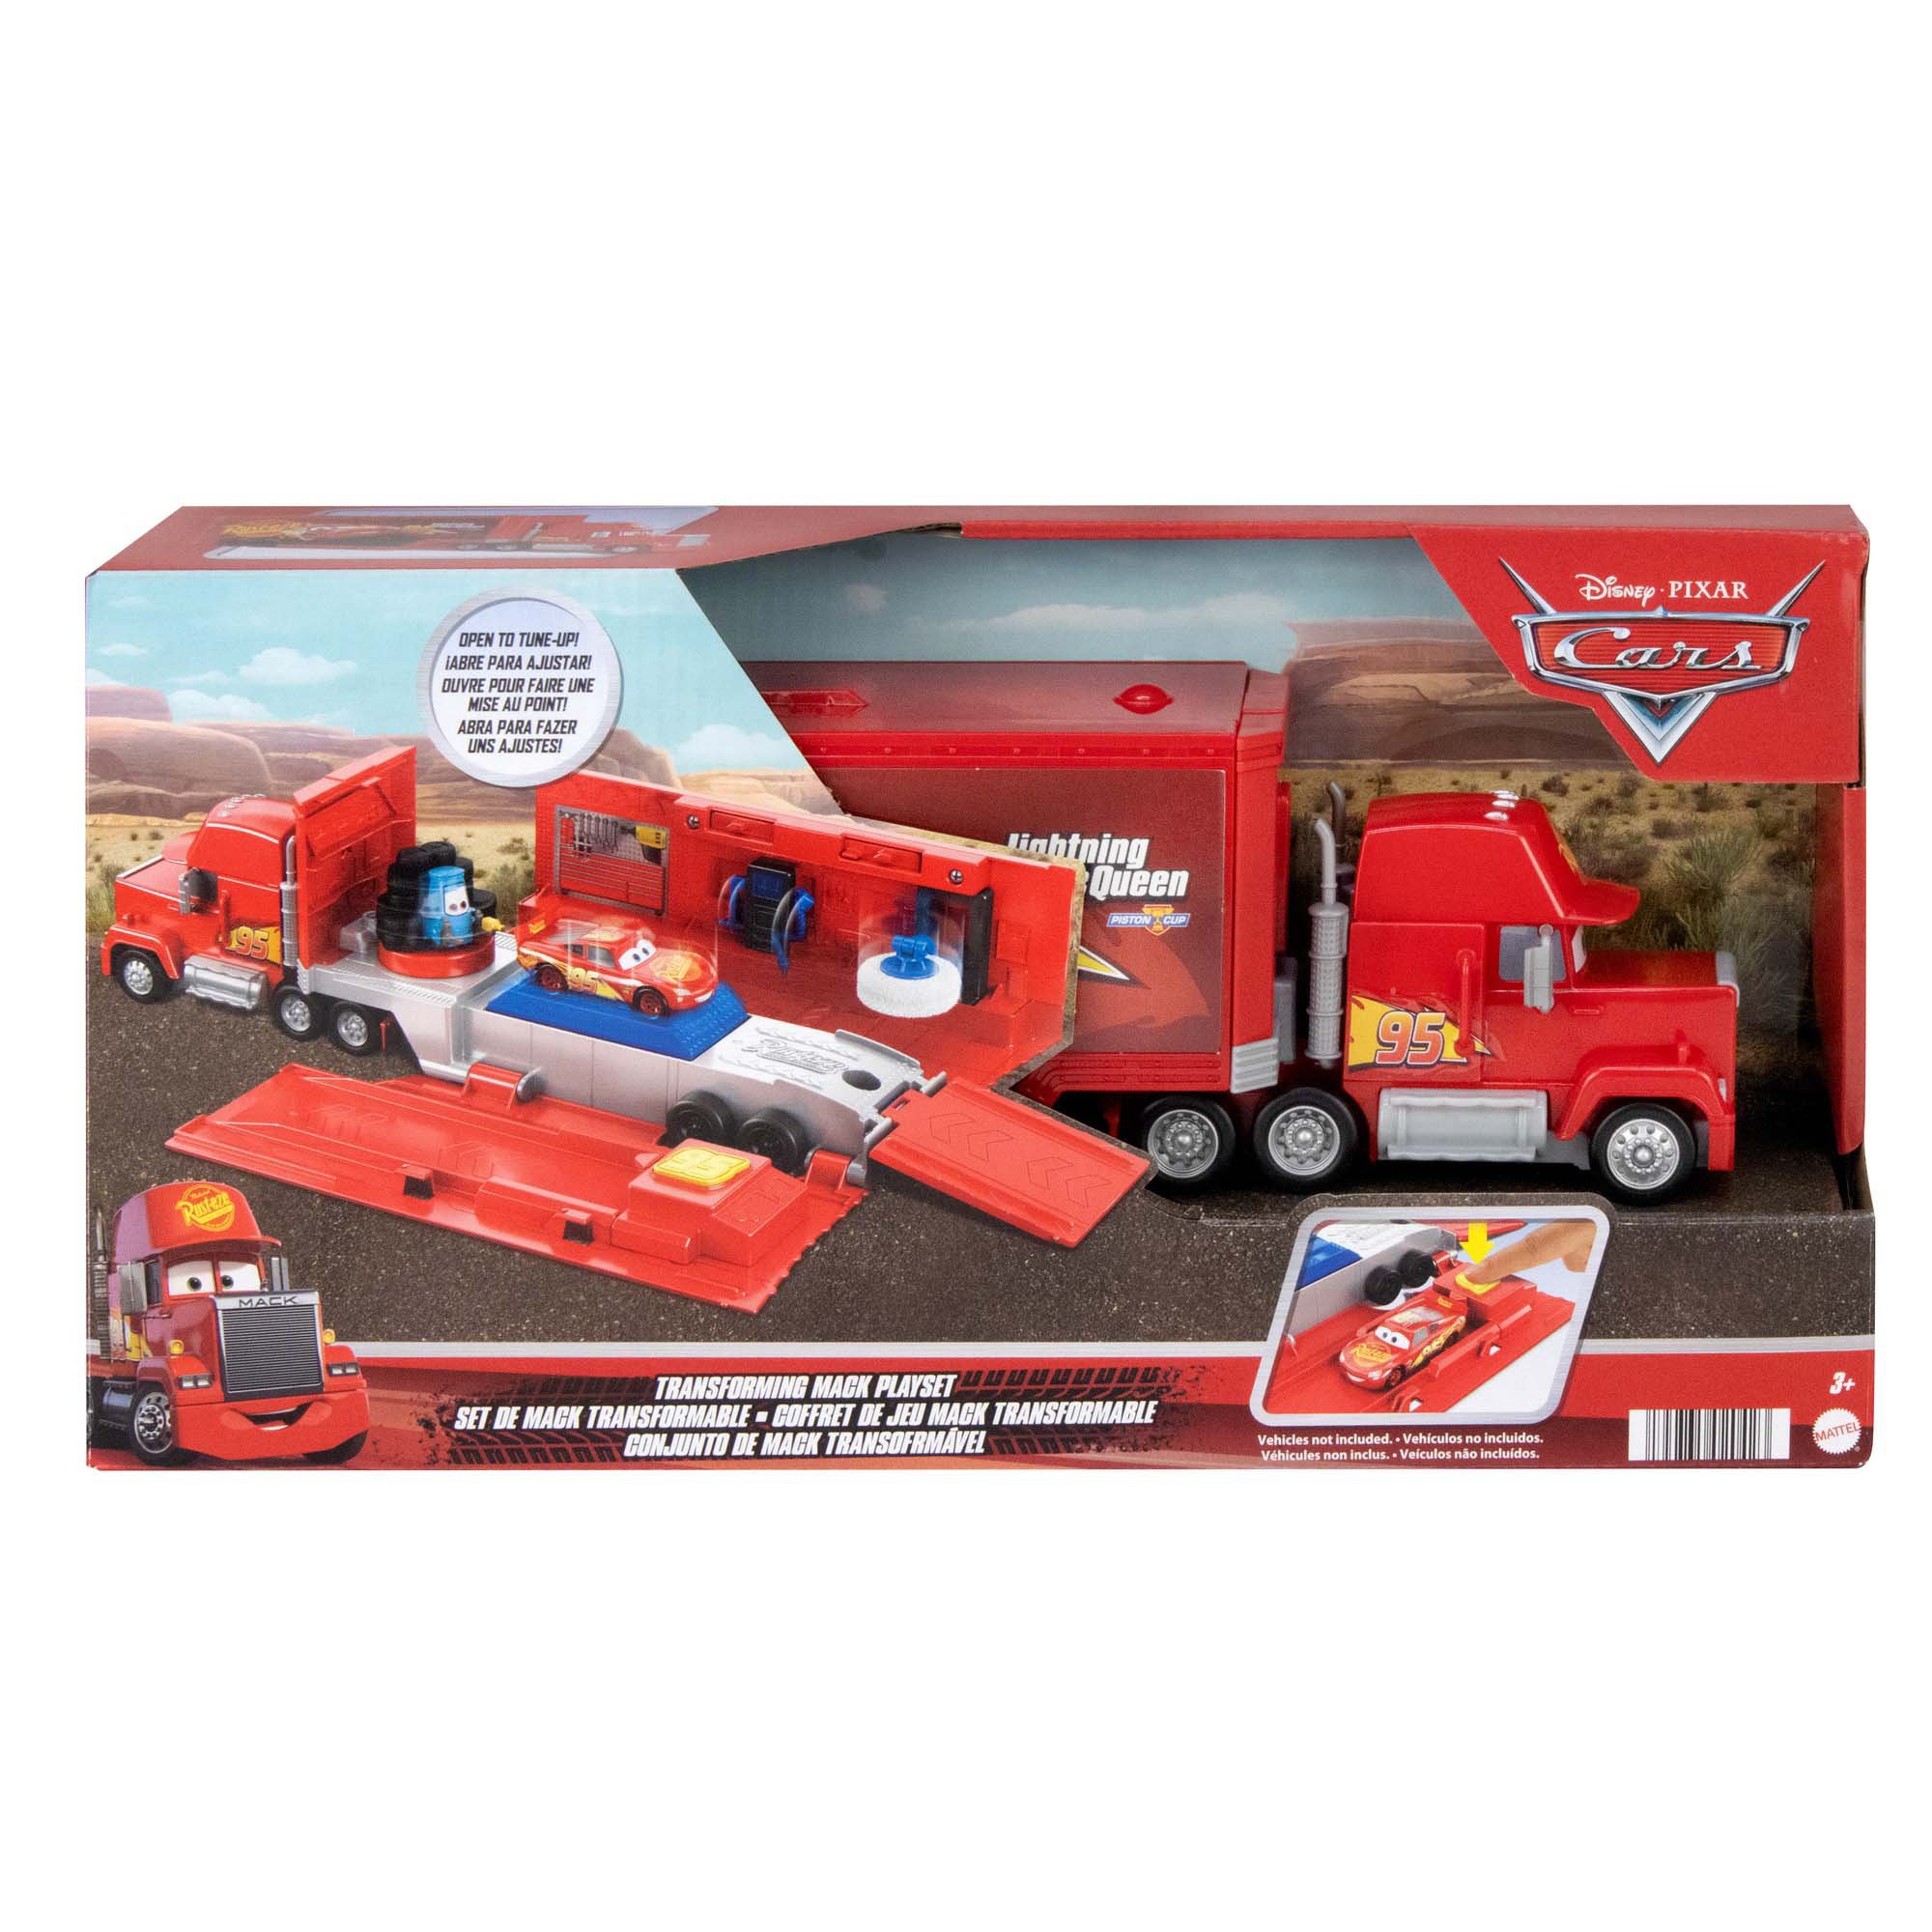 Disneypixar Cars Mack Hauler Movie Playset Toy Truck And Transporter